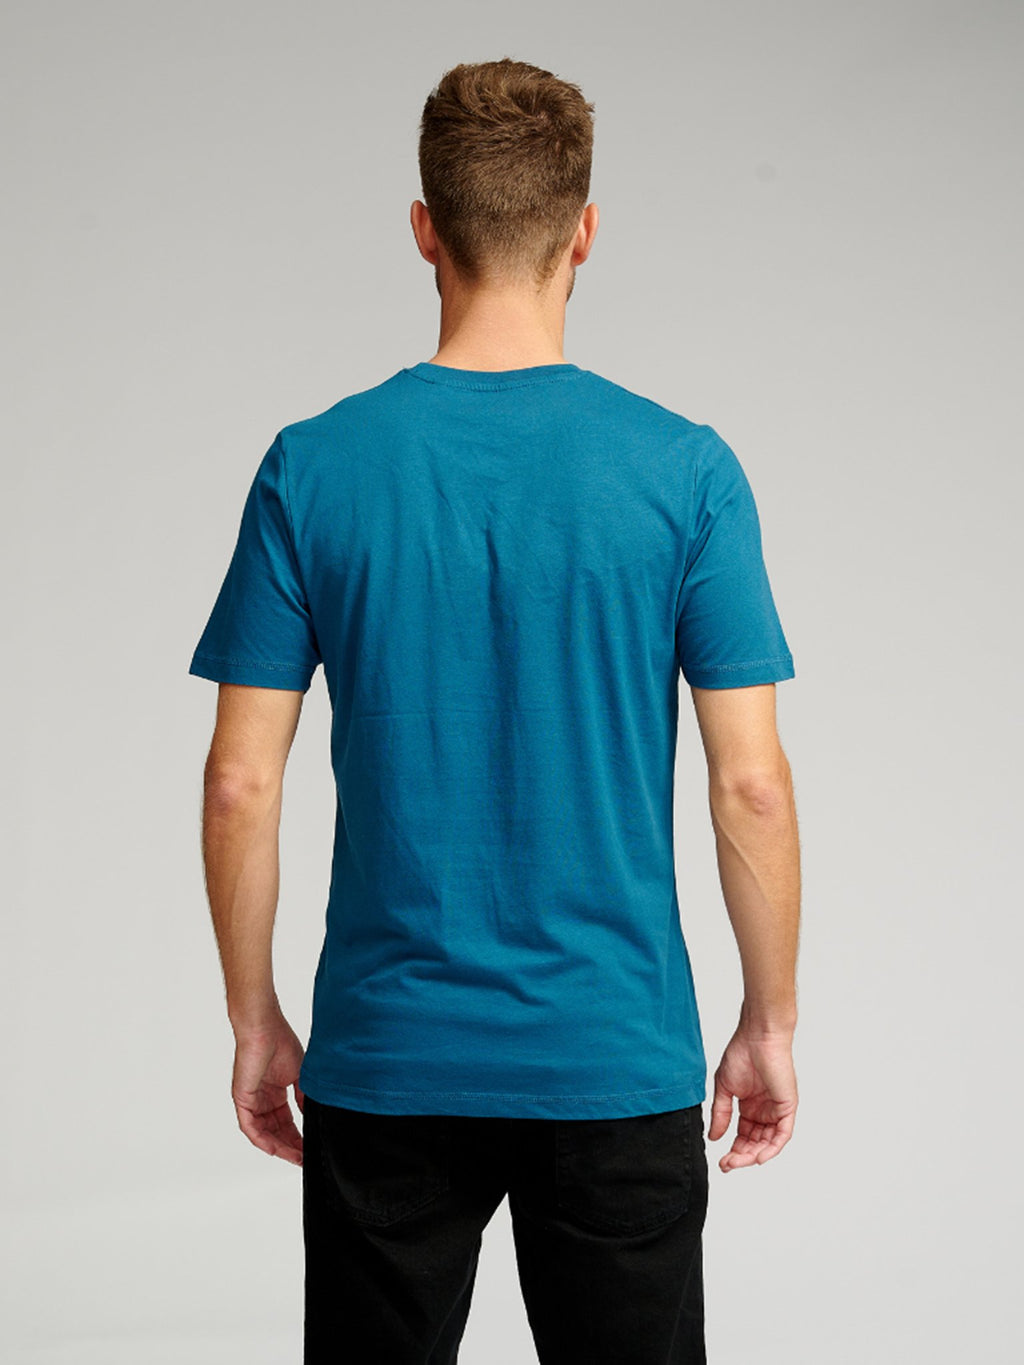 Camiseta básica orgánica - Azul de gasolina